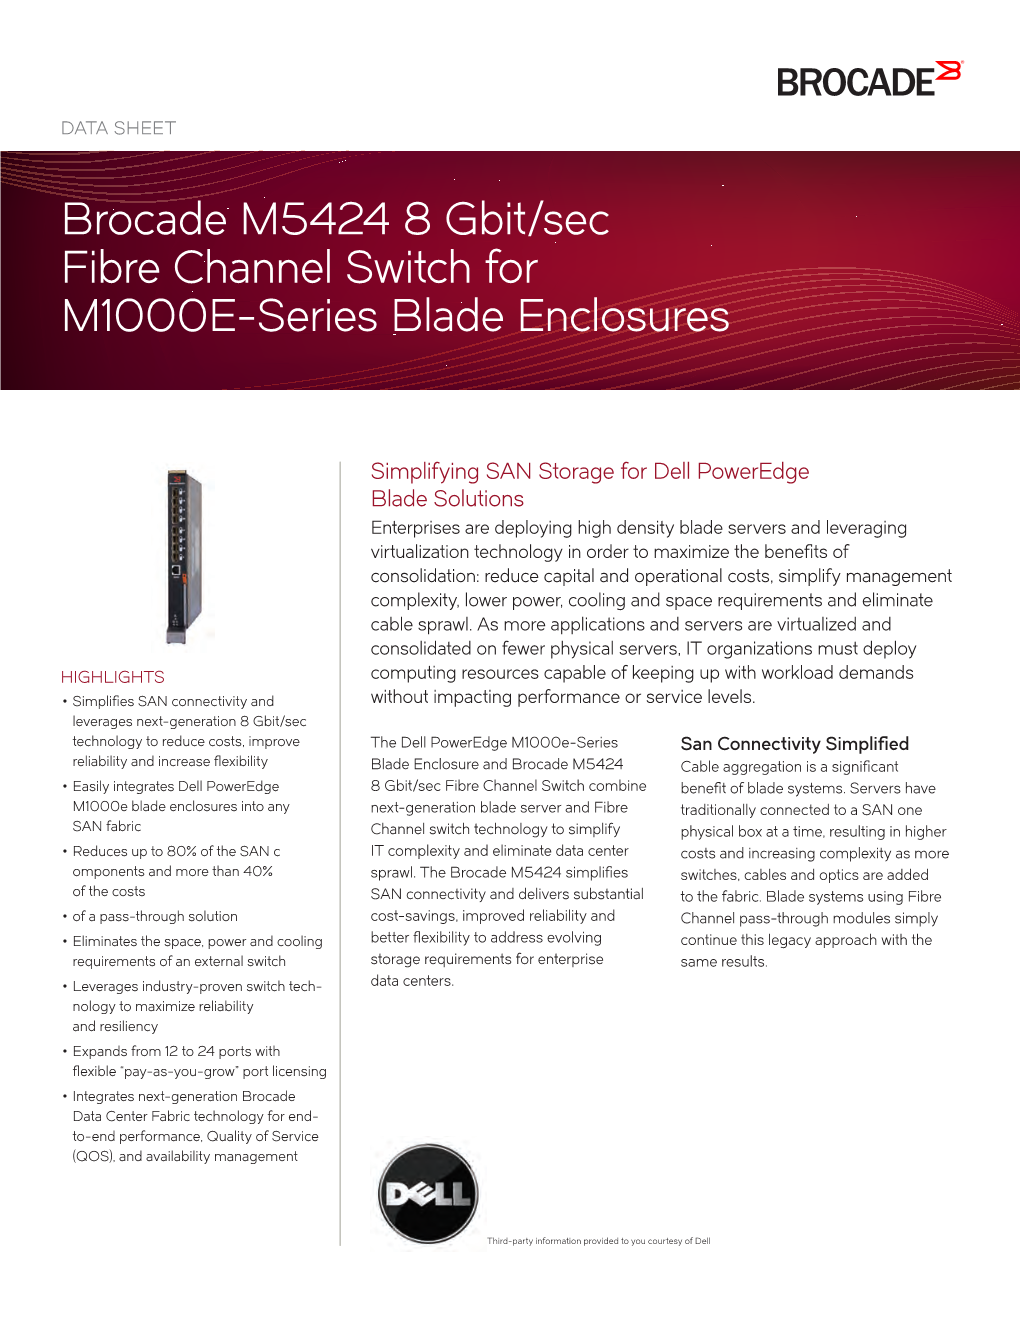 Brocade M5424 8 Gbit/Sec Fibre Channel Switch for M1000E-Series Blade Enclosures